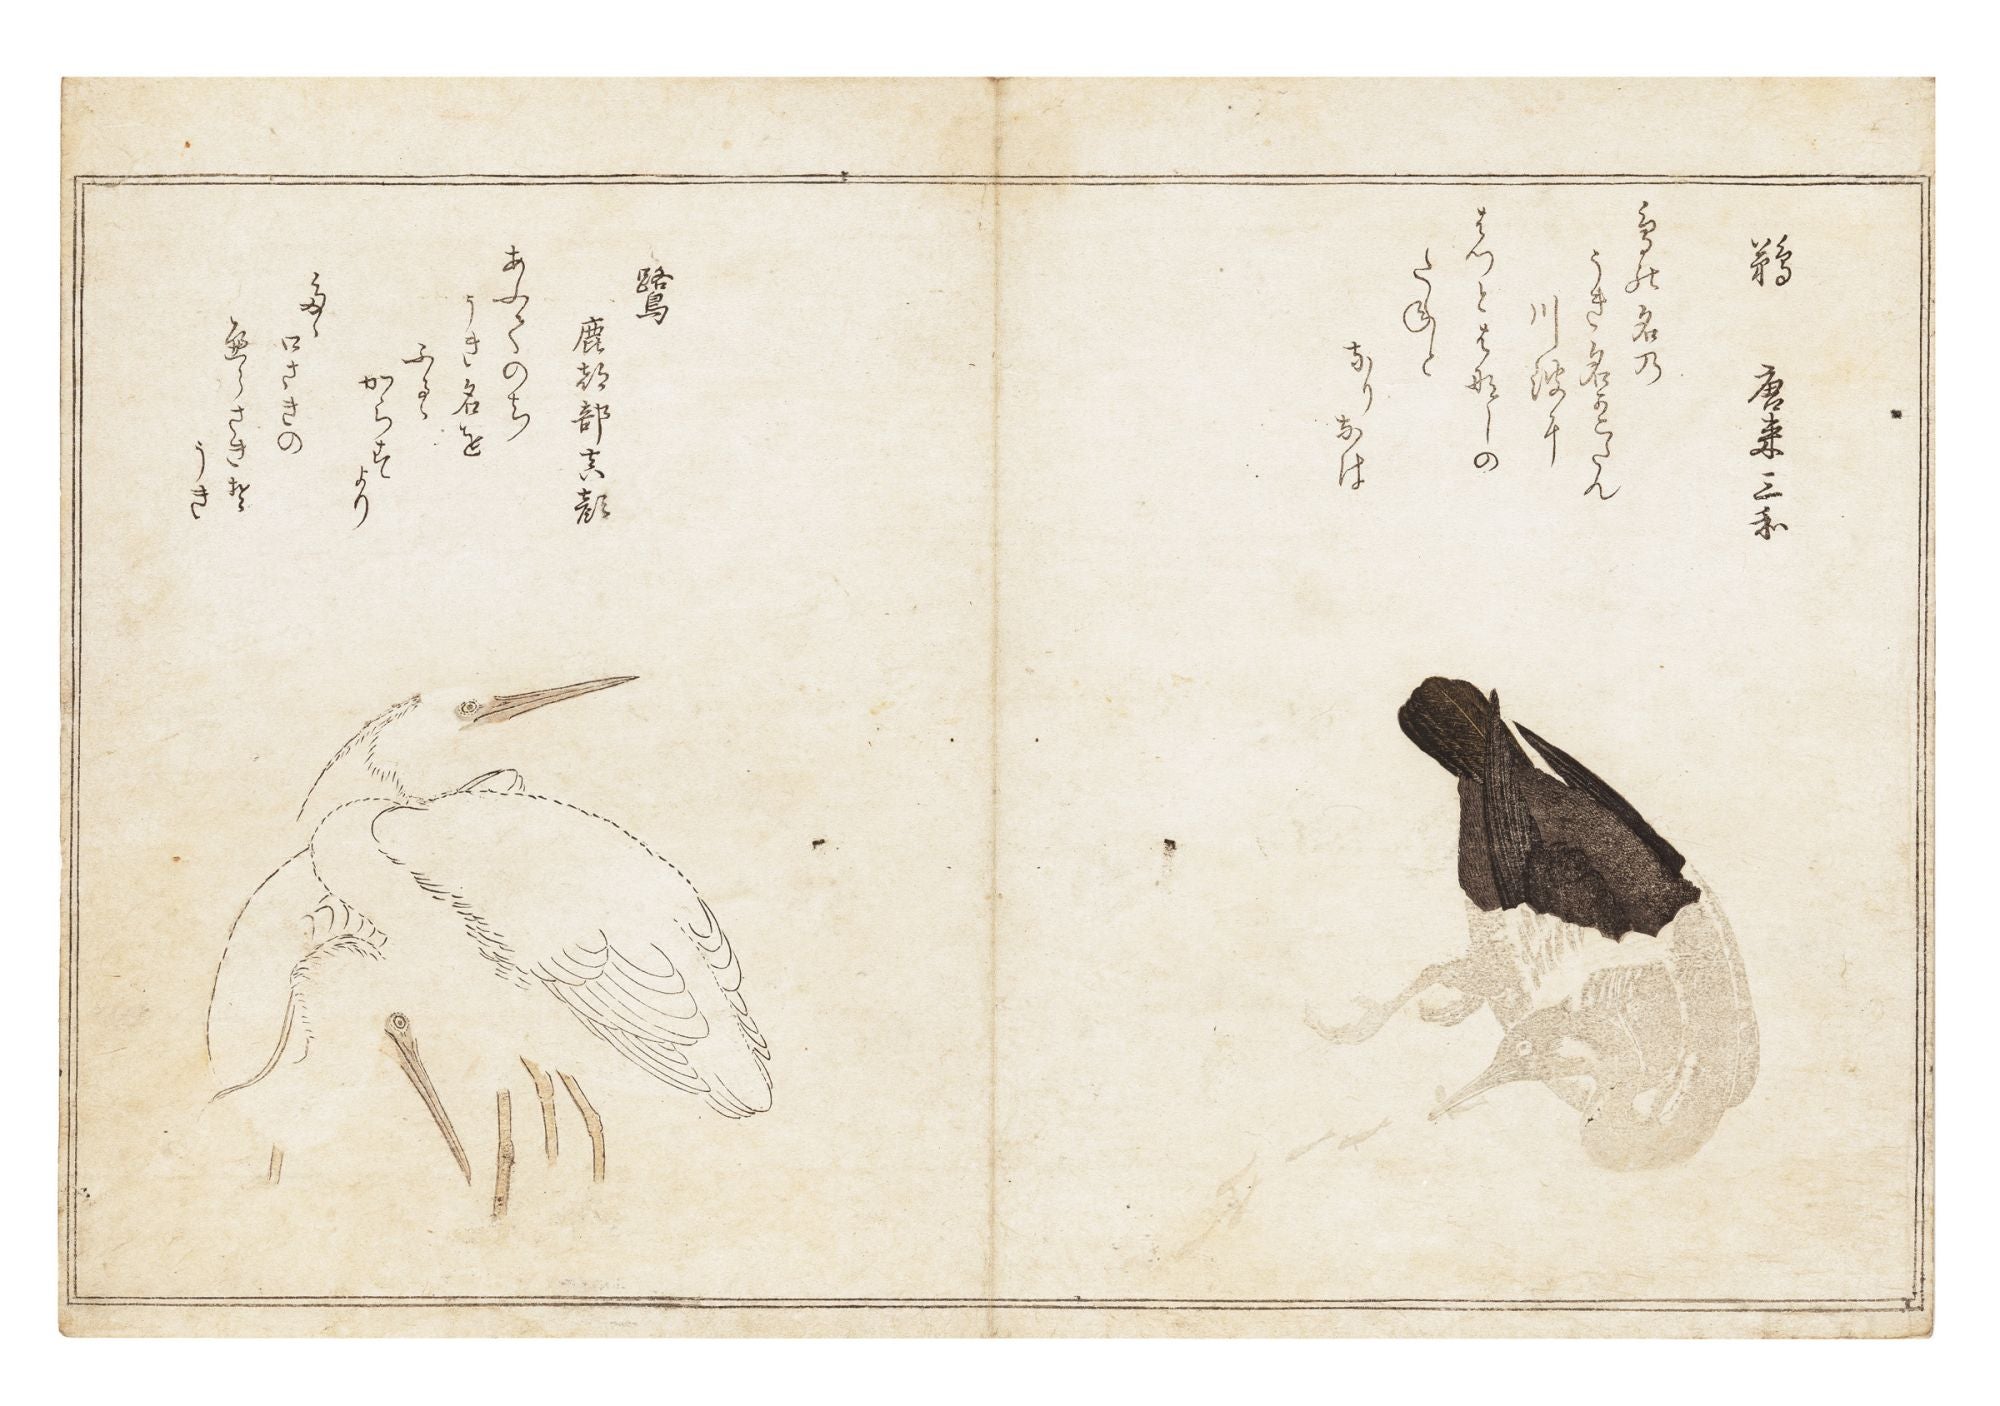 Momo chidori kyoka awase 百千鳥狂歌合 Manifold Birds, A Competition of Kyoka  Poetry by Utamaro 喜多川歌麿 Kitagawa, artist on JONATHAN A. HILL, BOOKSELLER,  INC